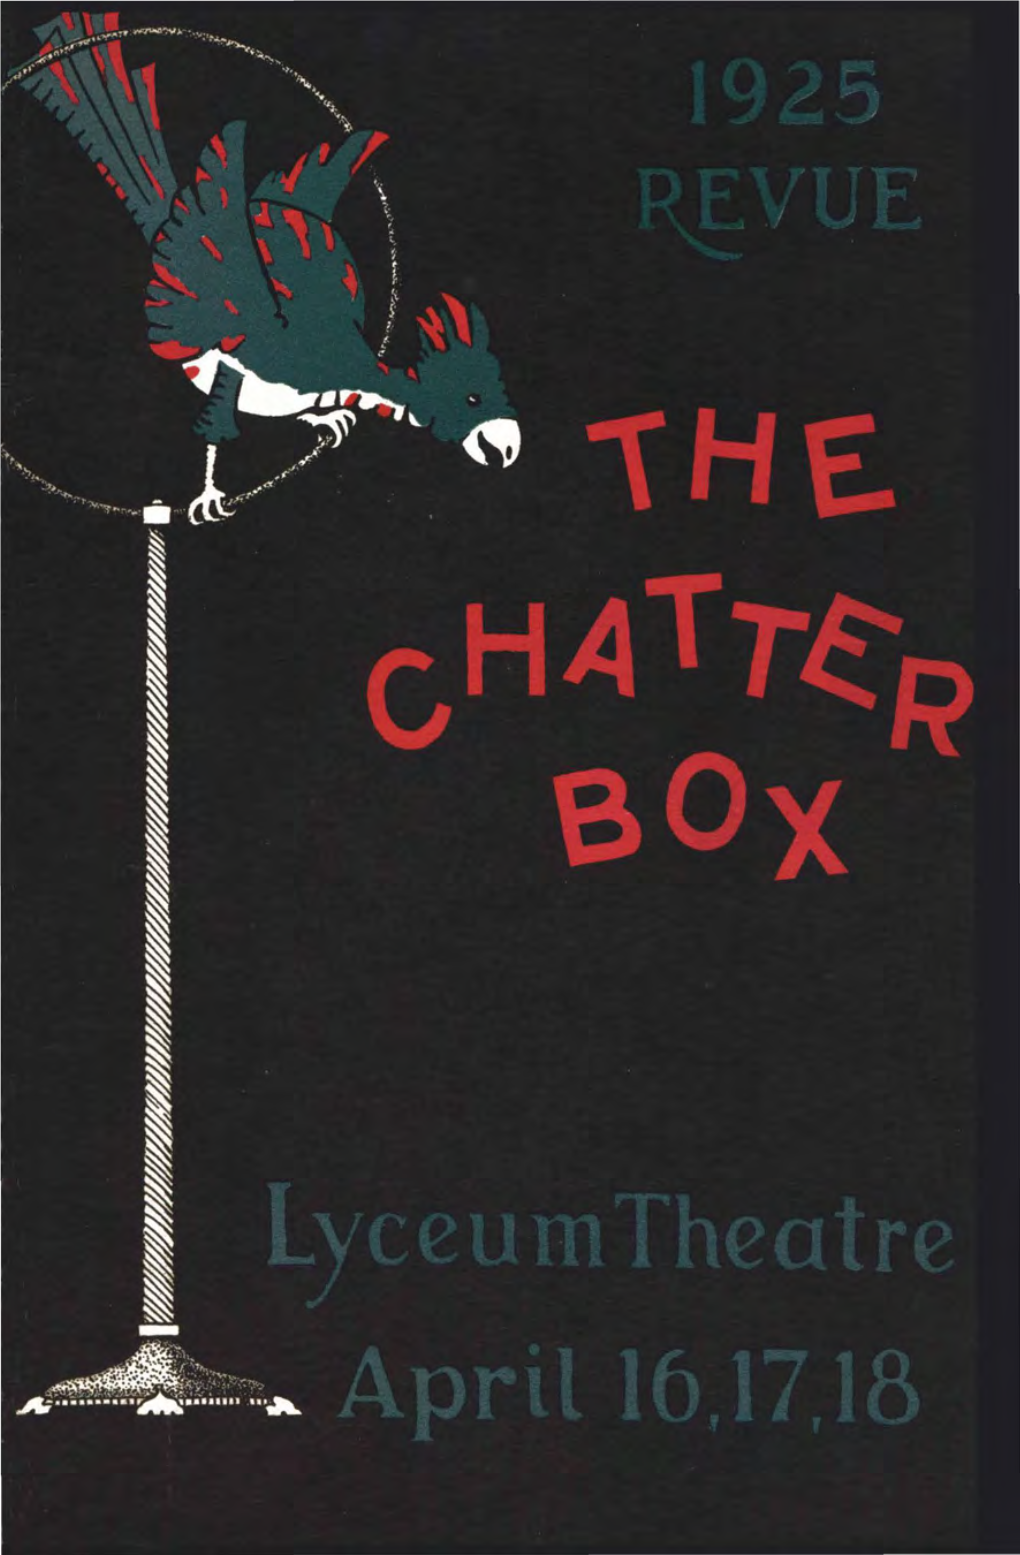 Chatterbox Revue, 1925